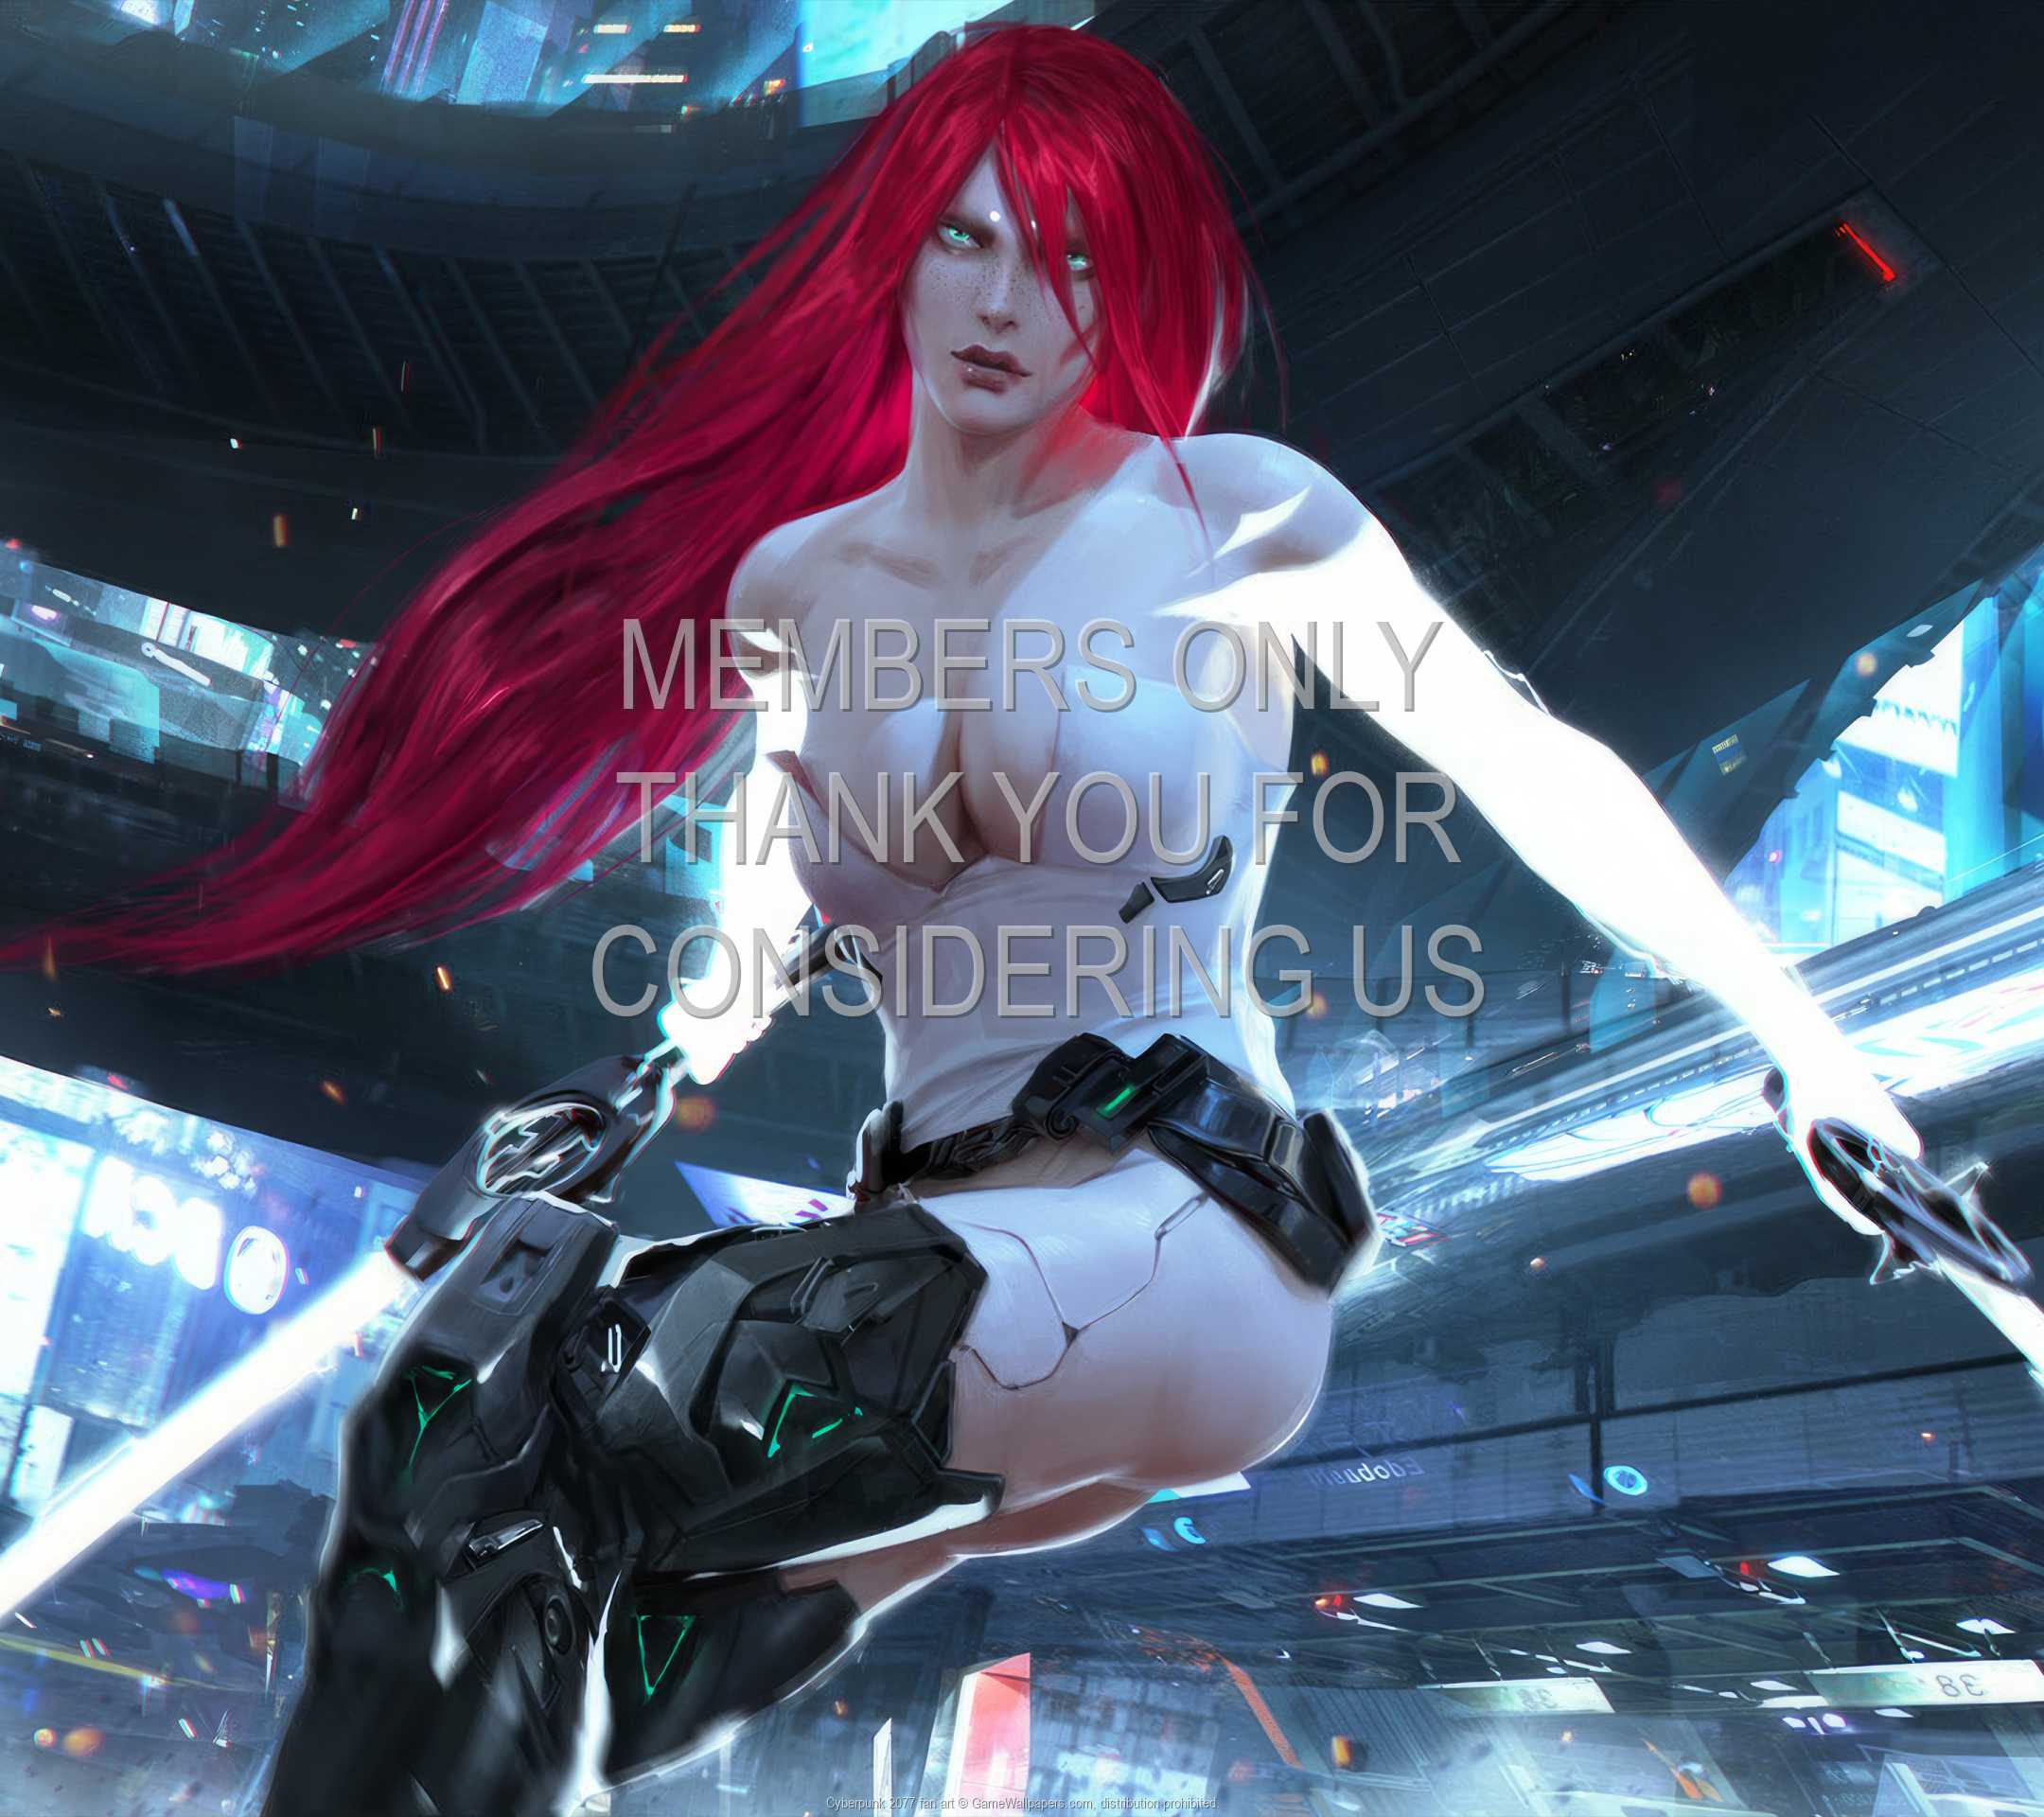 Cyberpunk 2077 fan art 1080p Horizontal Mobile wallpaper or background 10